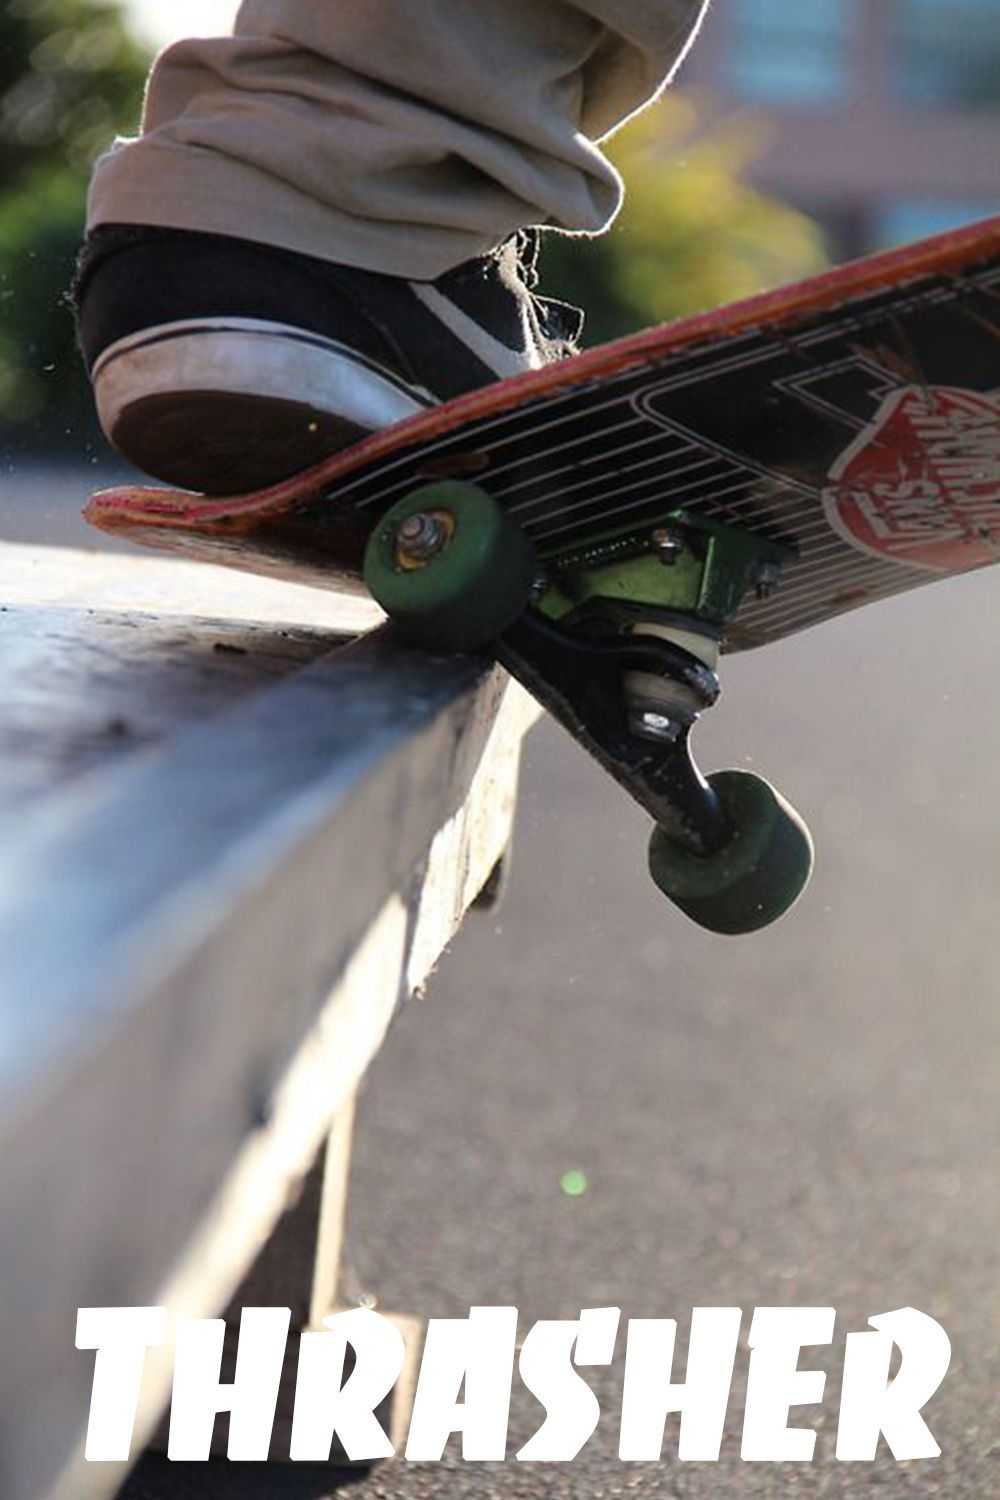 A skateboarder is doing tricks on the sidewalk - Skate